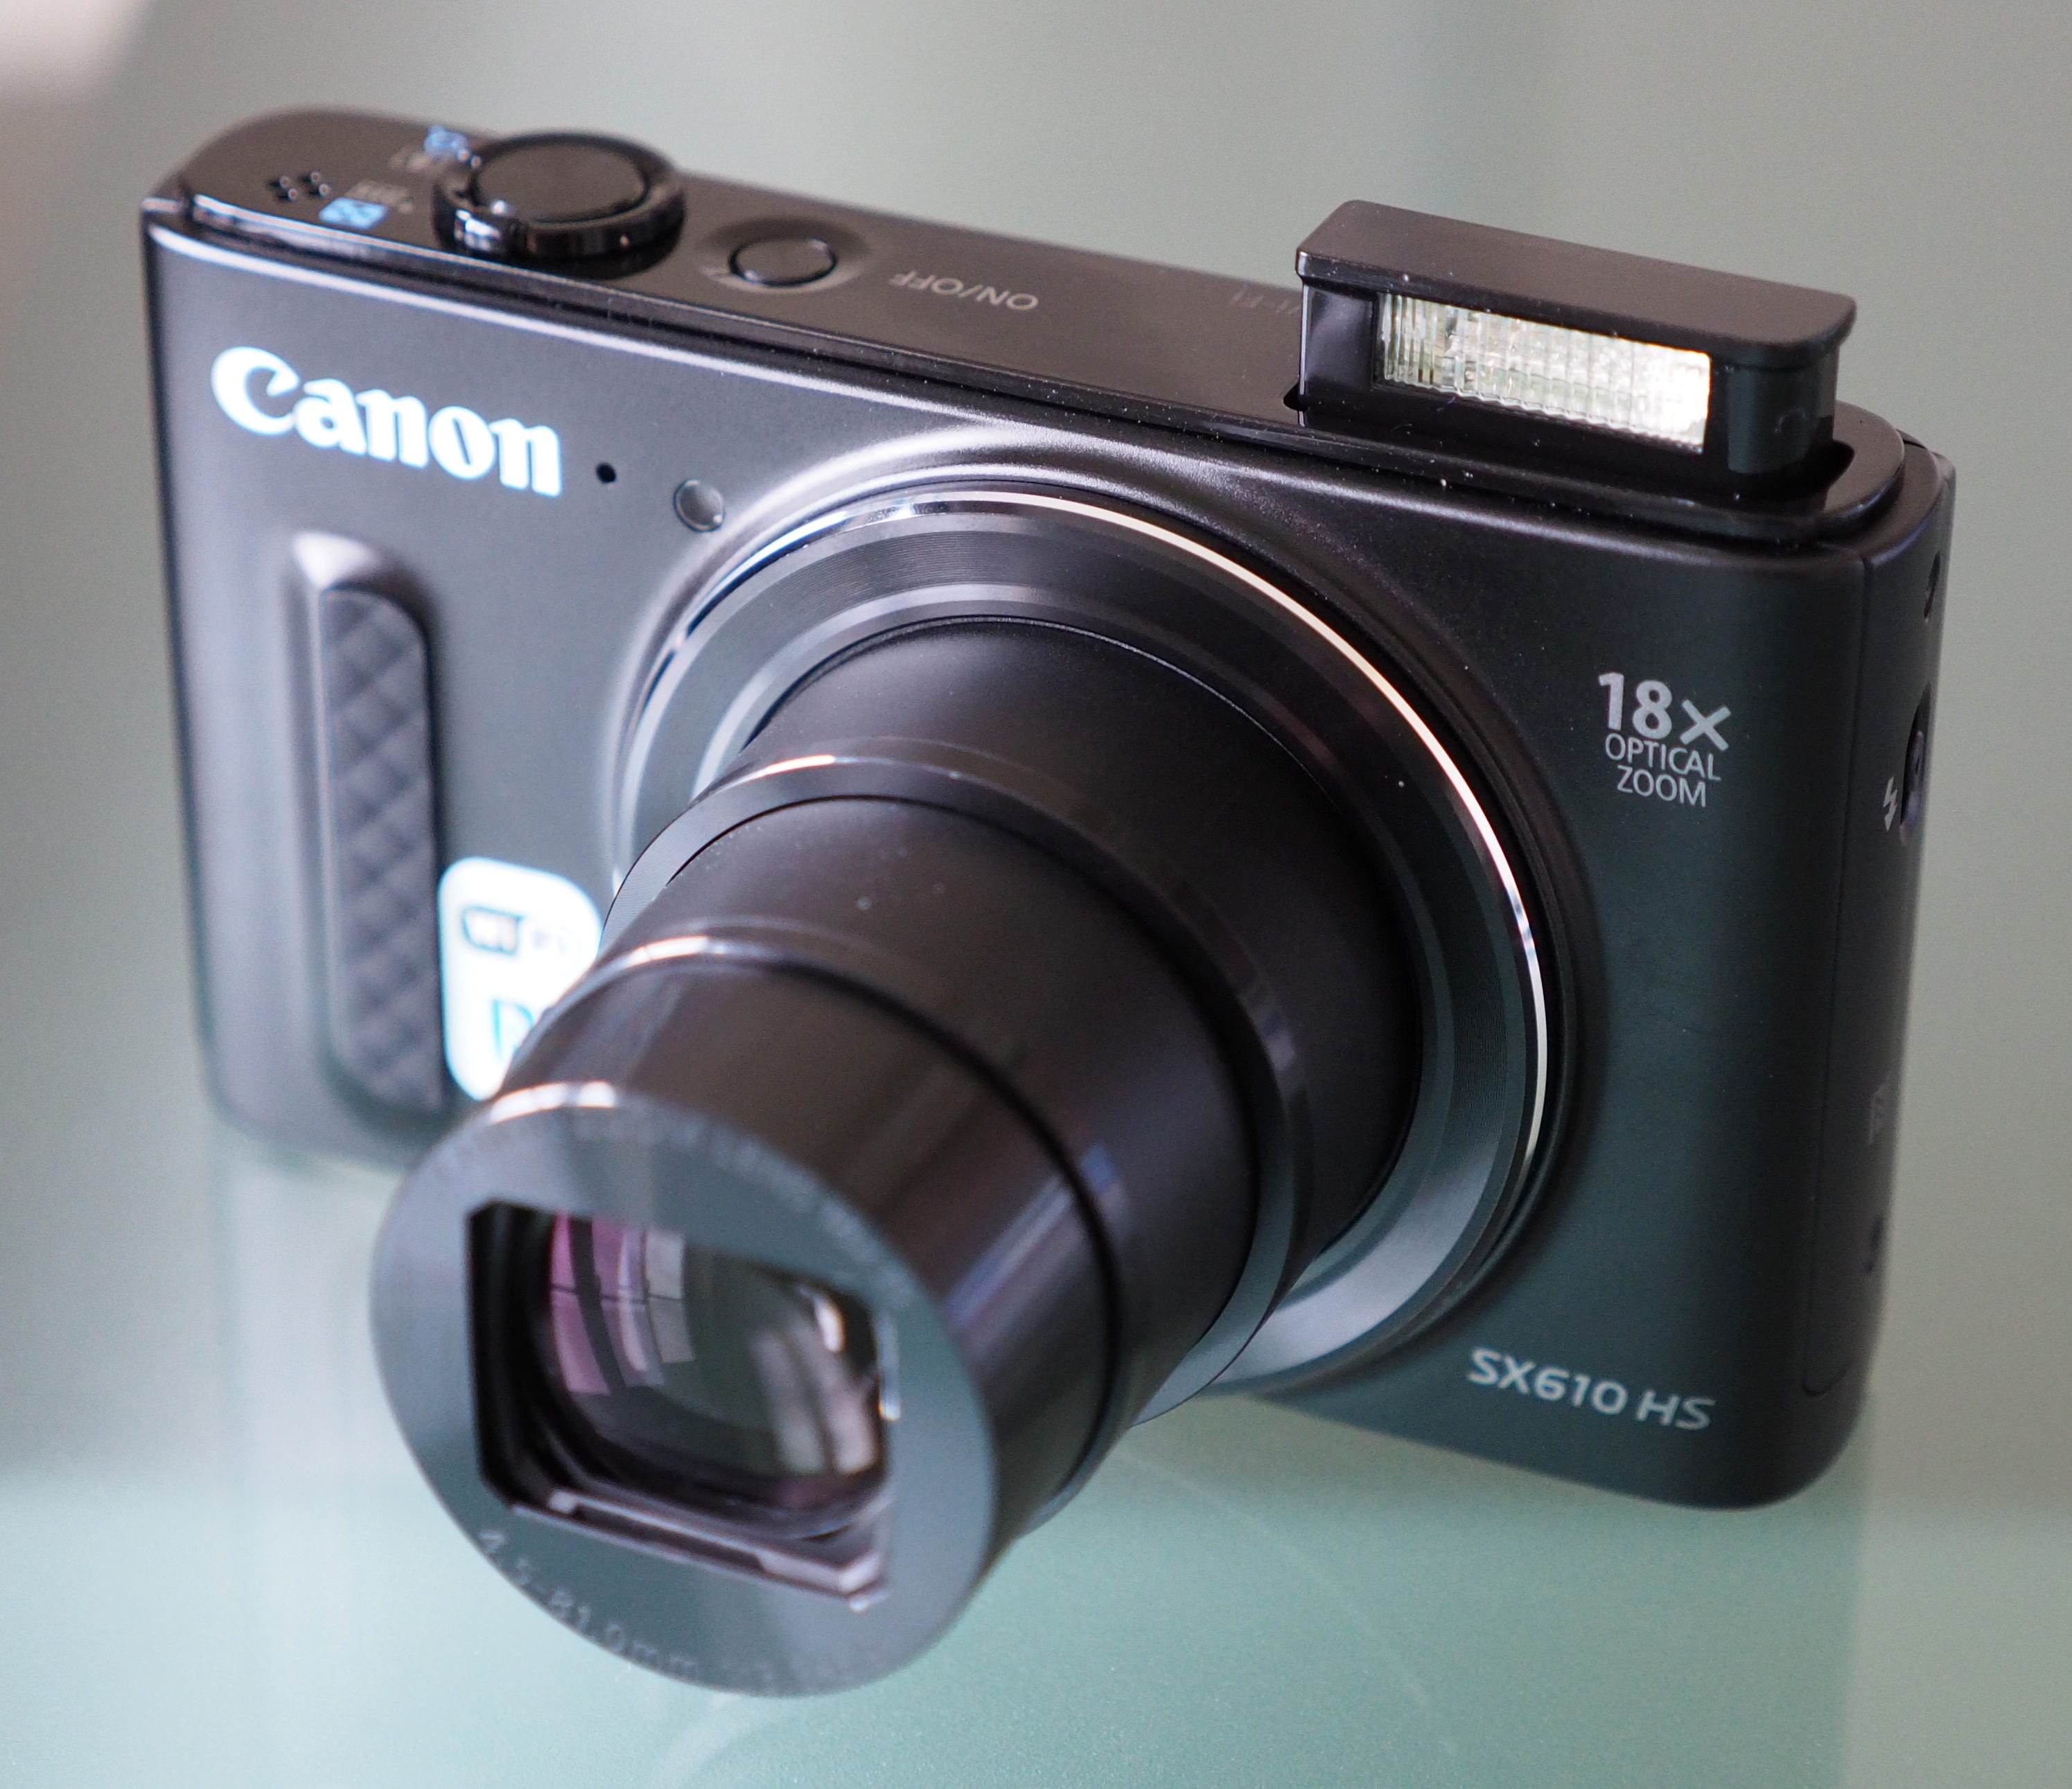 Canon PowerShot SX610 HS: זום קומפקטי לצילום חברתי